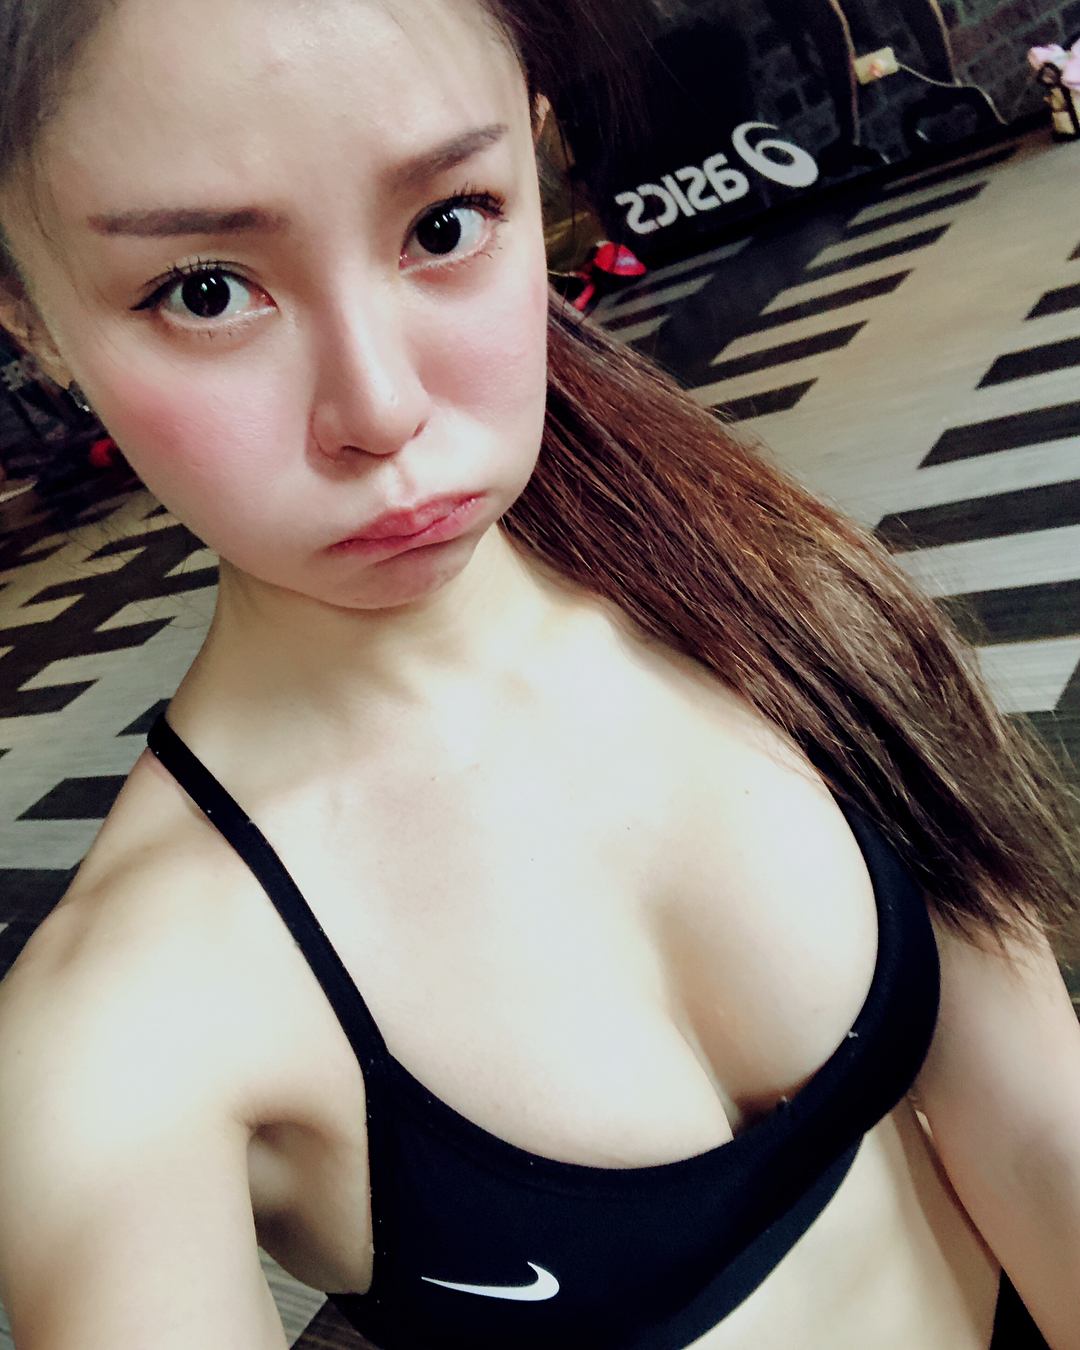 gigobaby 琪琪 江 kiki jiang sexy petite milf breasts tits gym nike workout babe